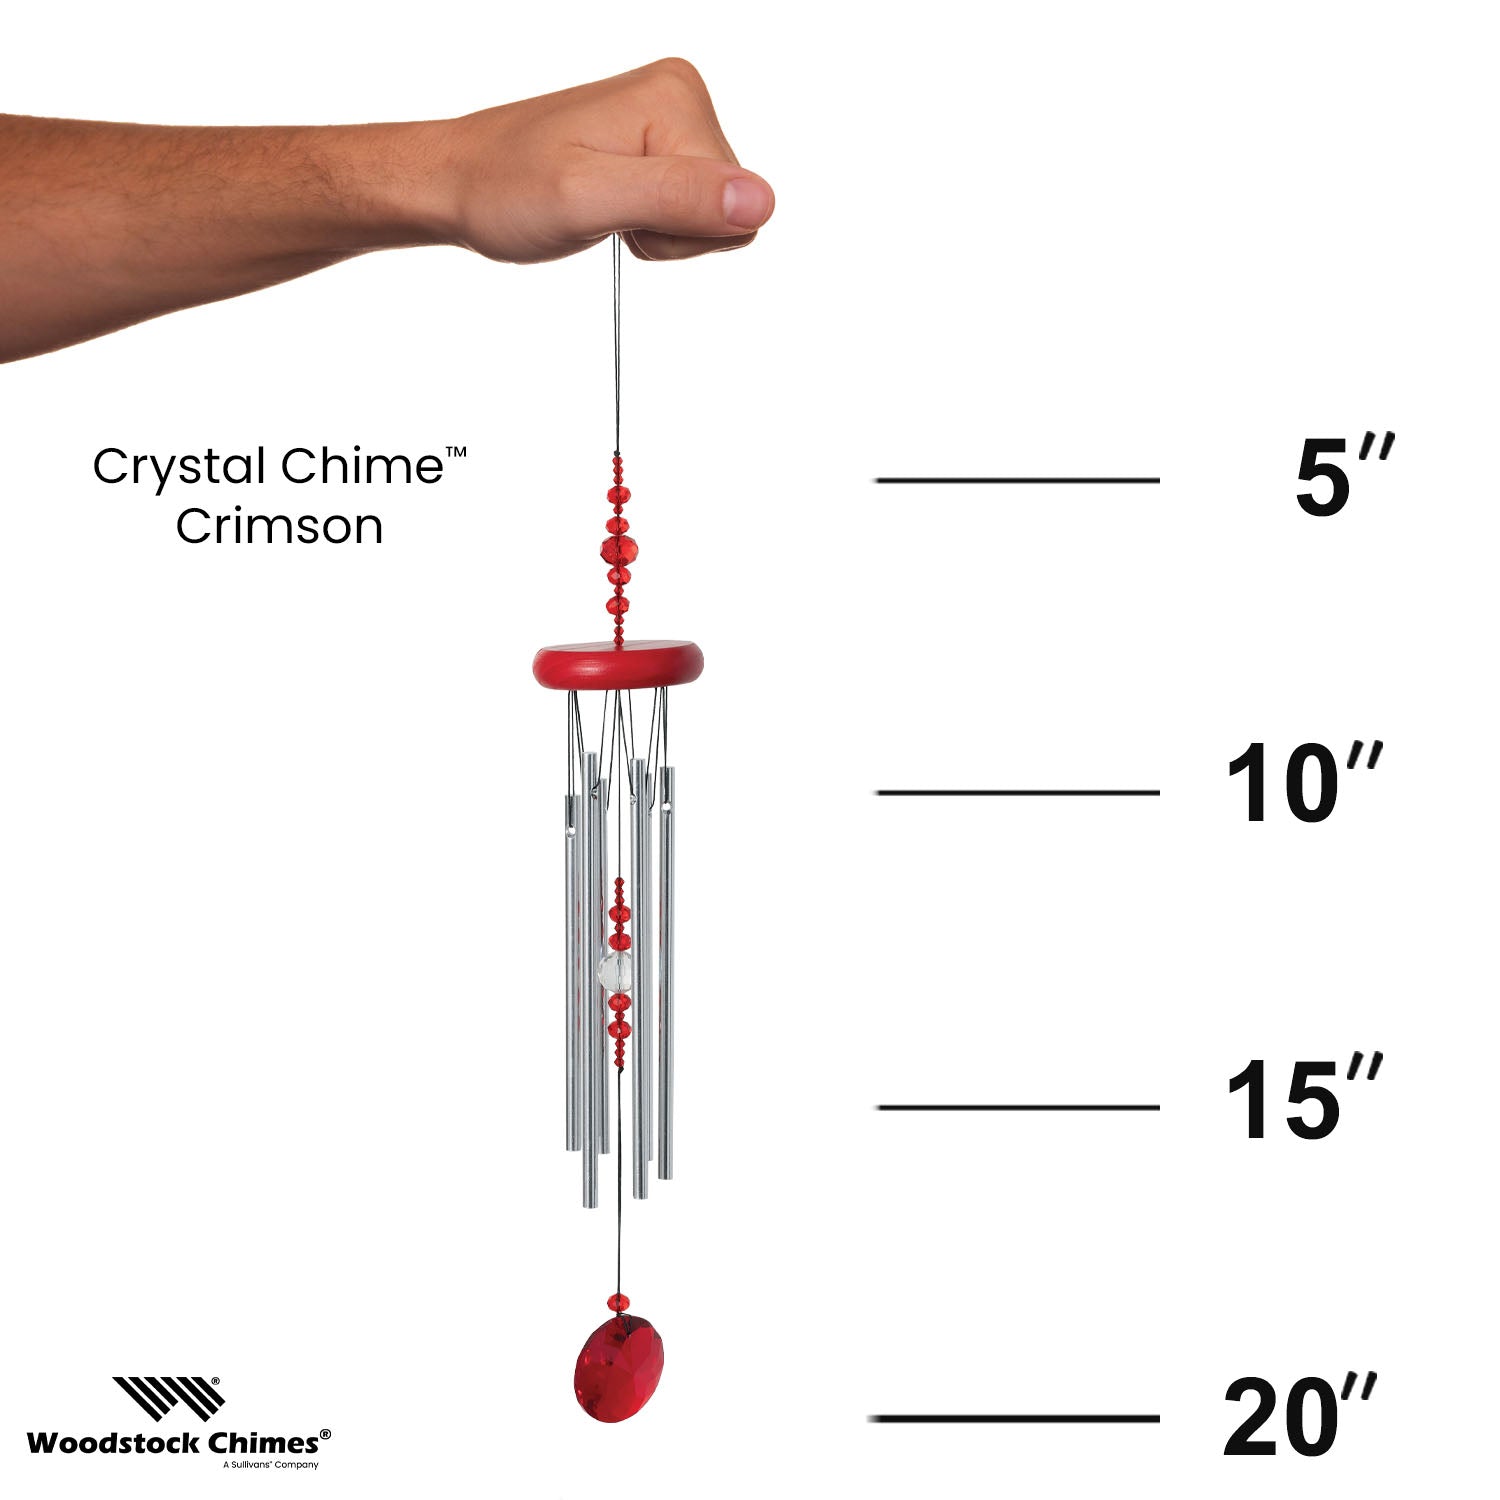 Crystal Chime - Crimson proportion image